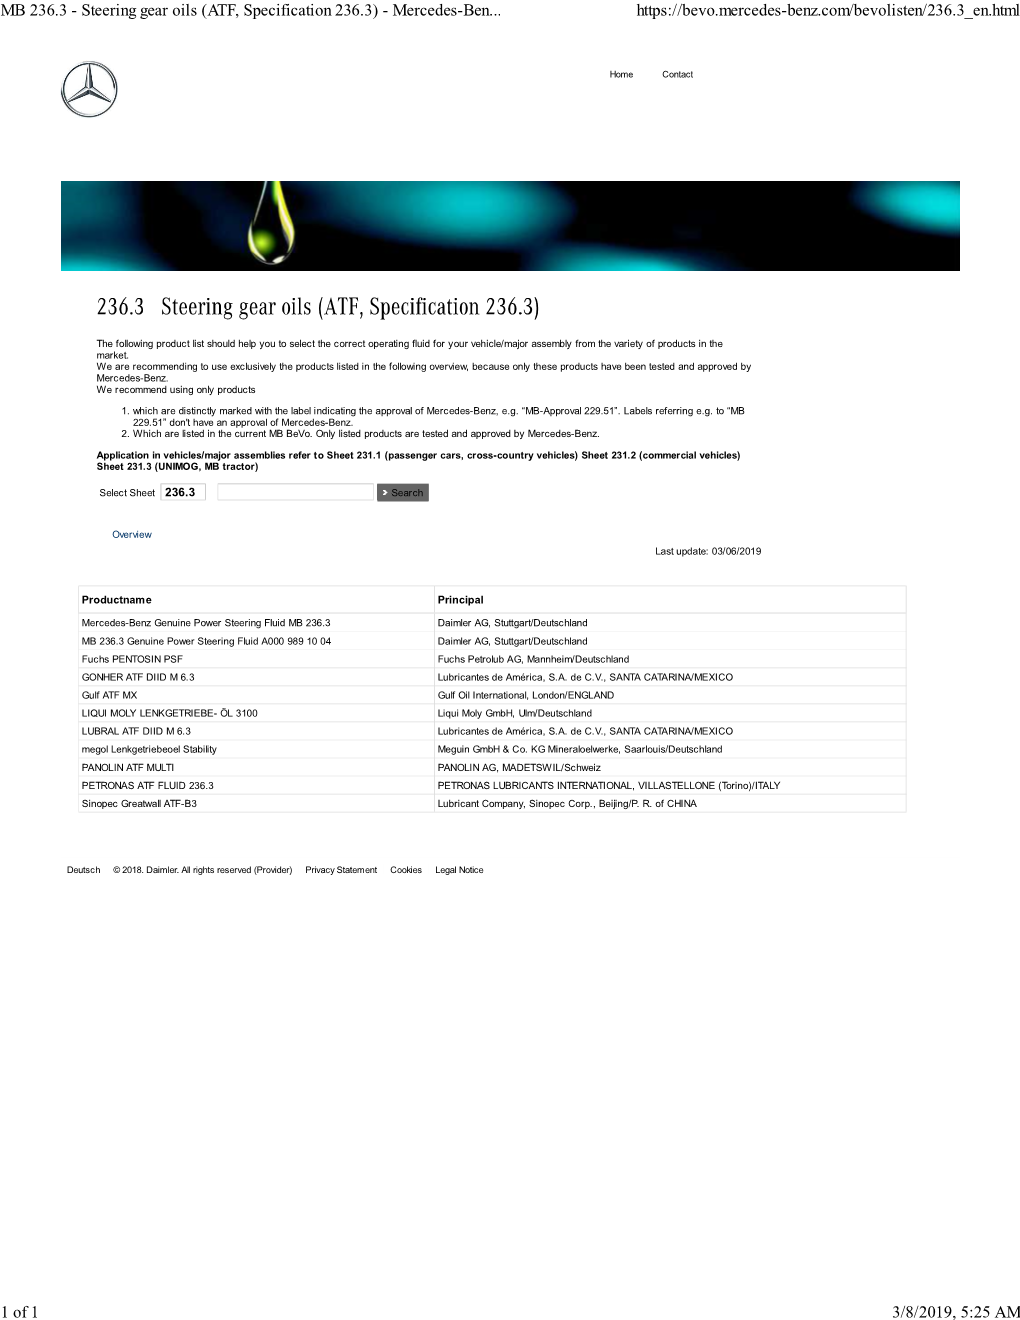 Steering Gear Oils (ATF, Specification 236.3) - Mercedes-Ben